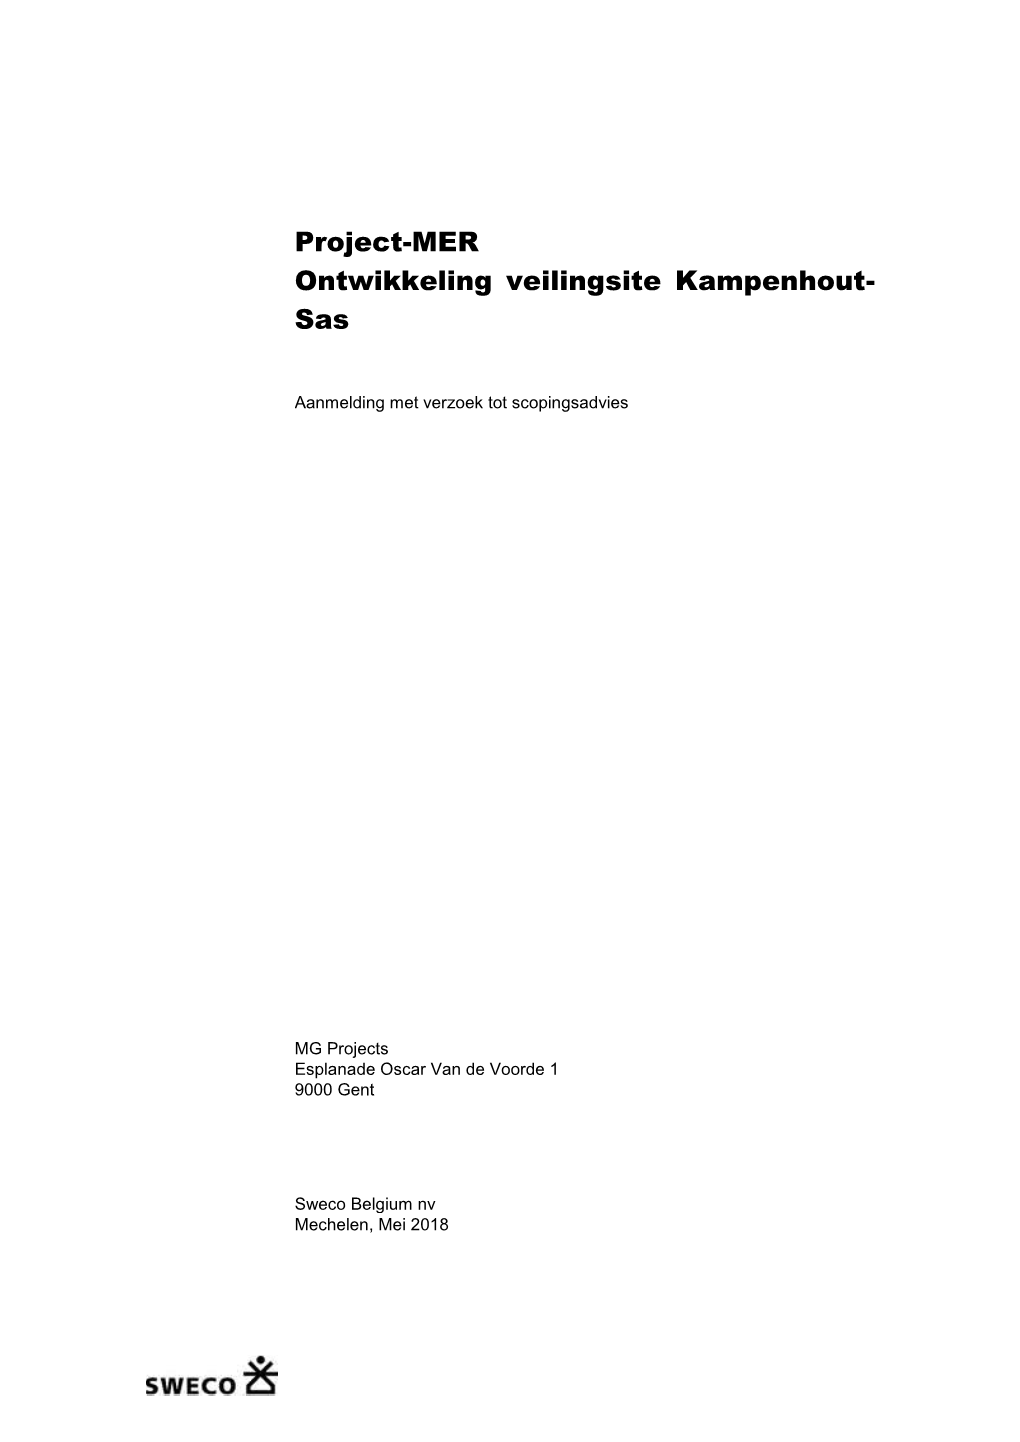 Project-MER Ontwikkeling Veilingsite Kampenhout- Sas